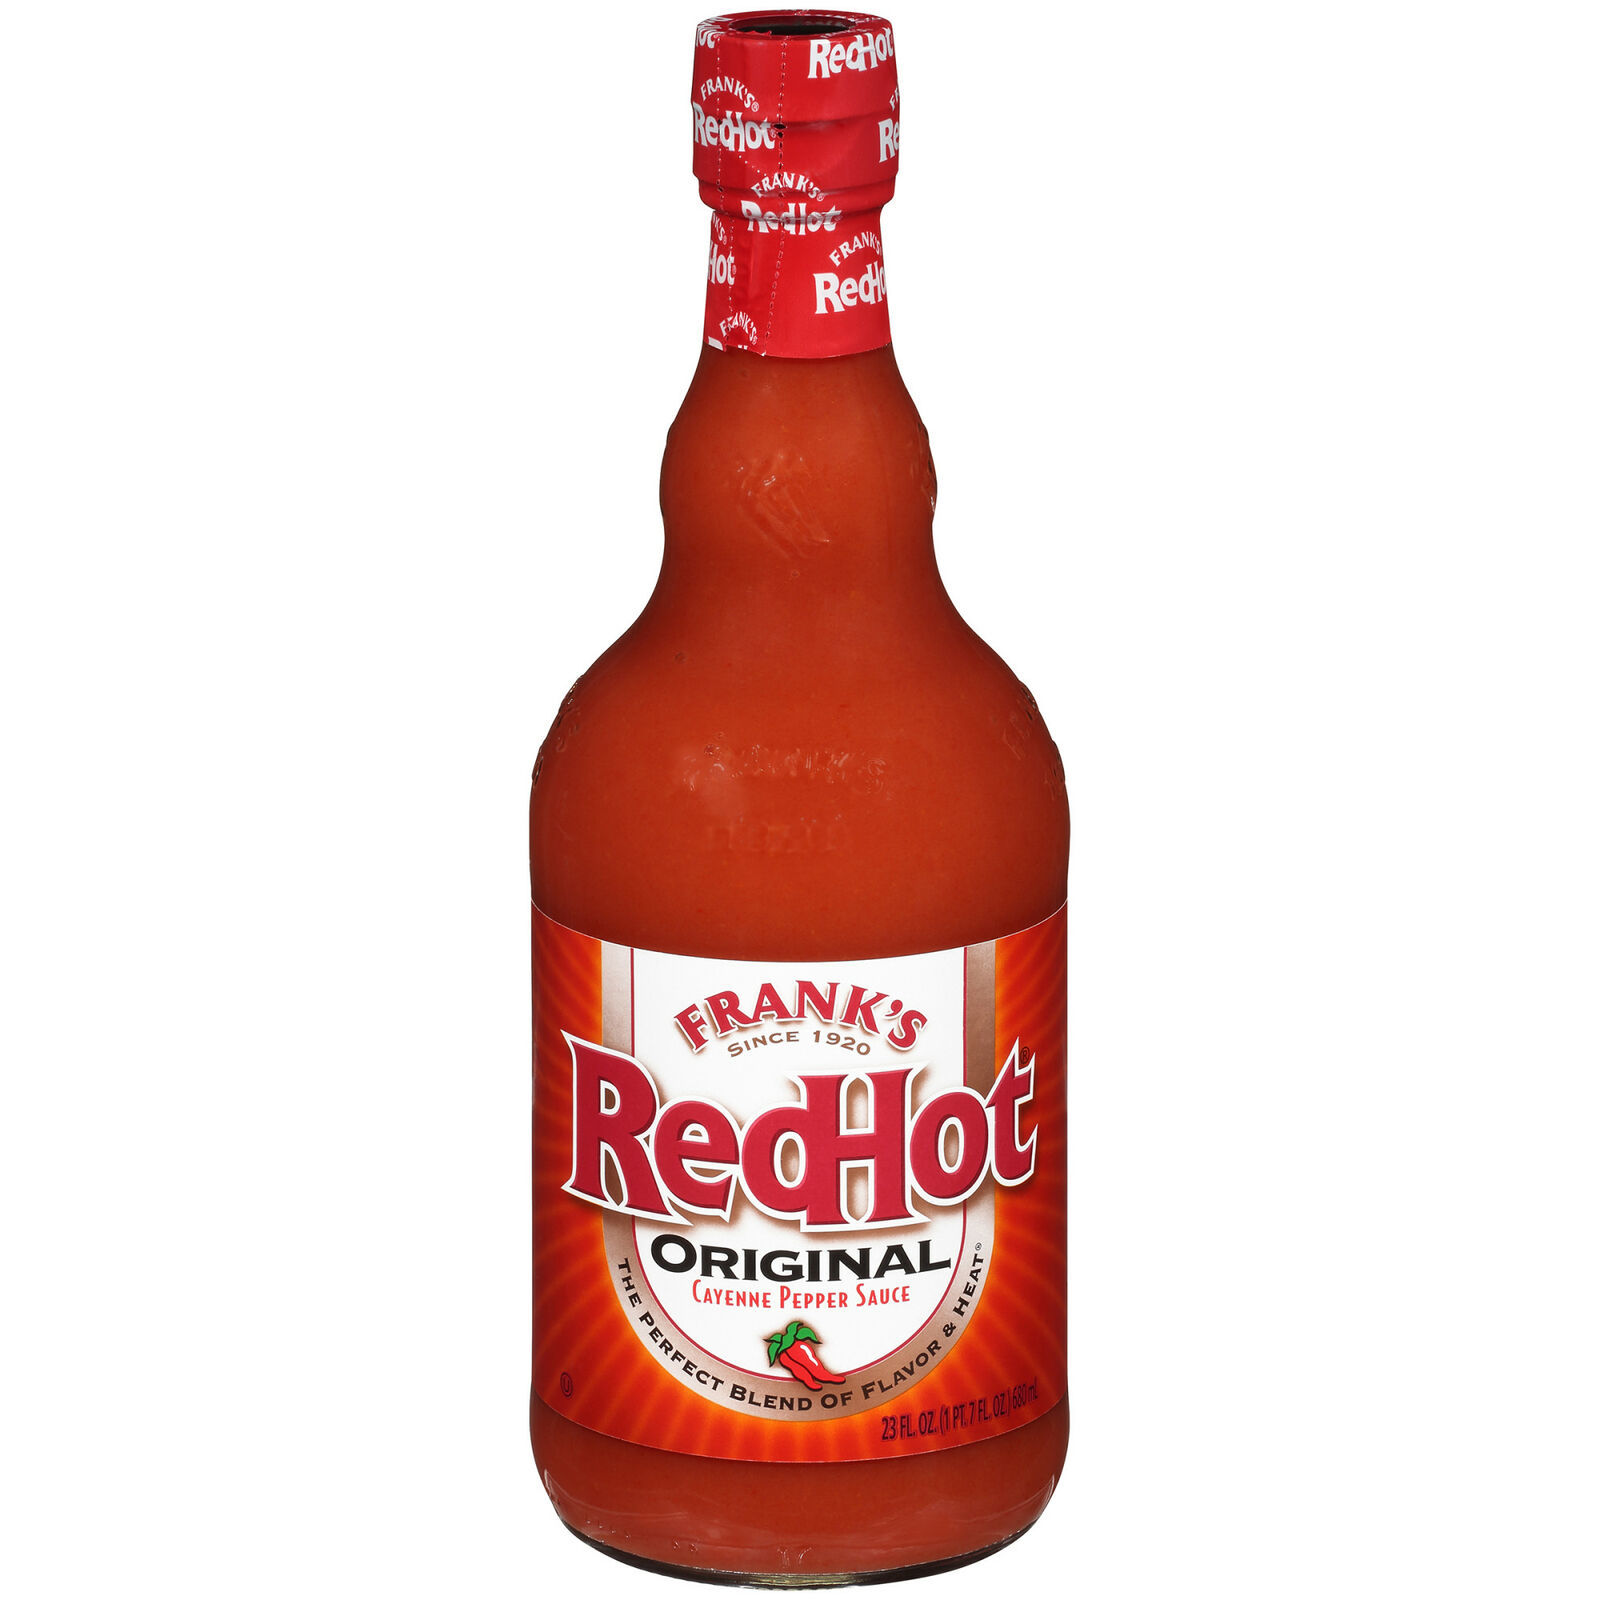 Primary image for (6 Pack) Frank's RedHot Original Cayenne Pepper Hot Sauce, 23 fl oz